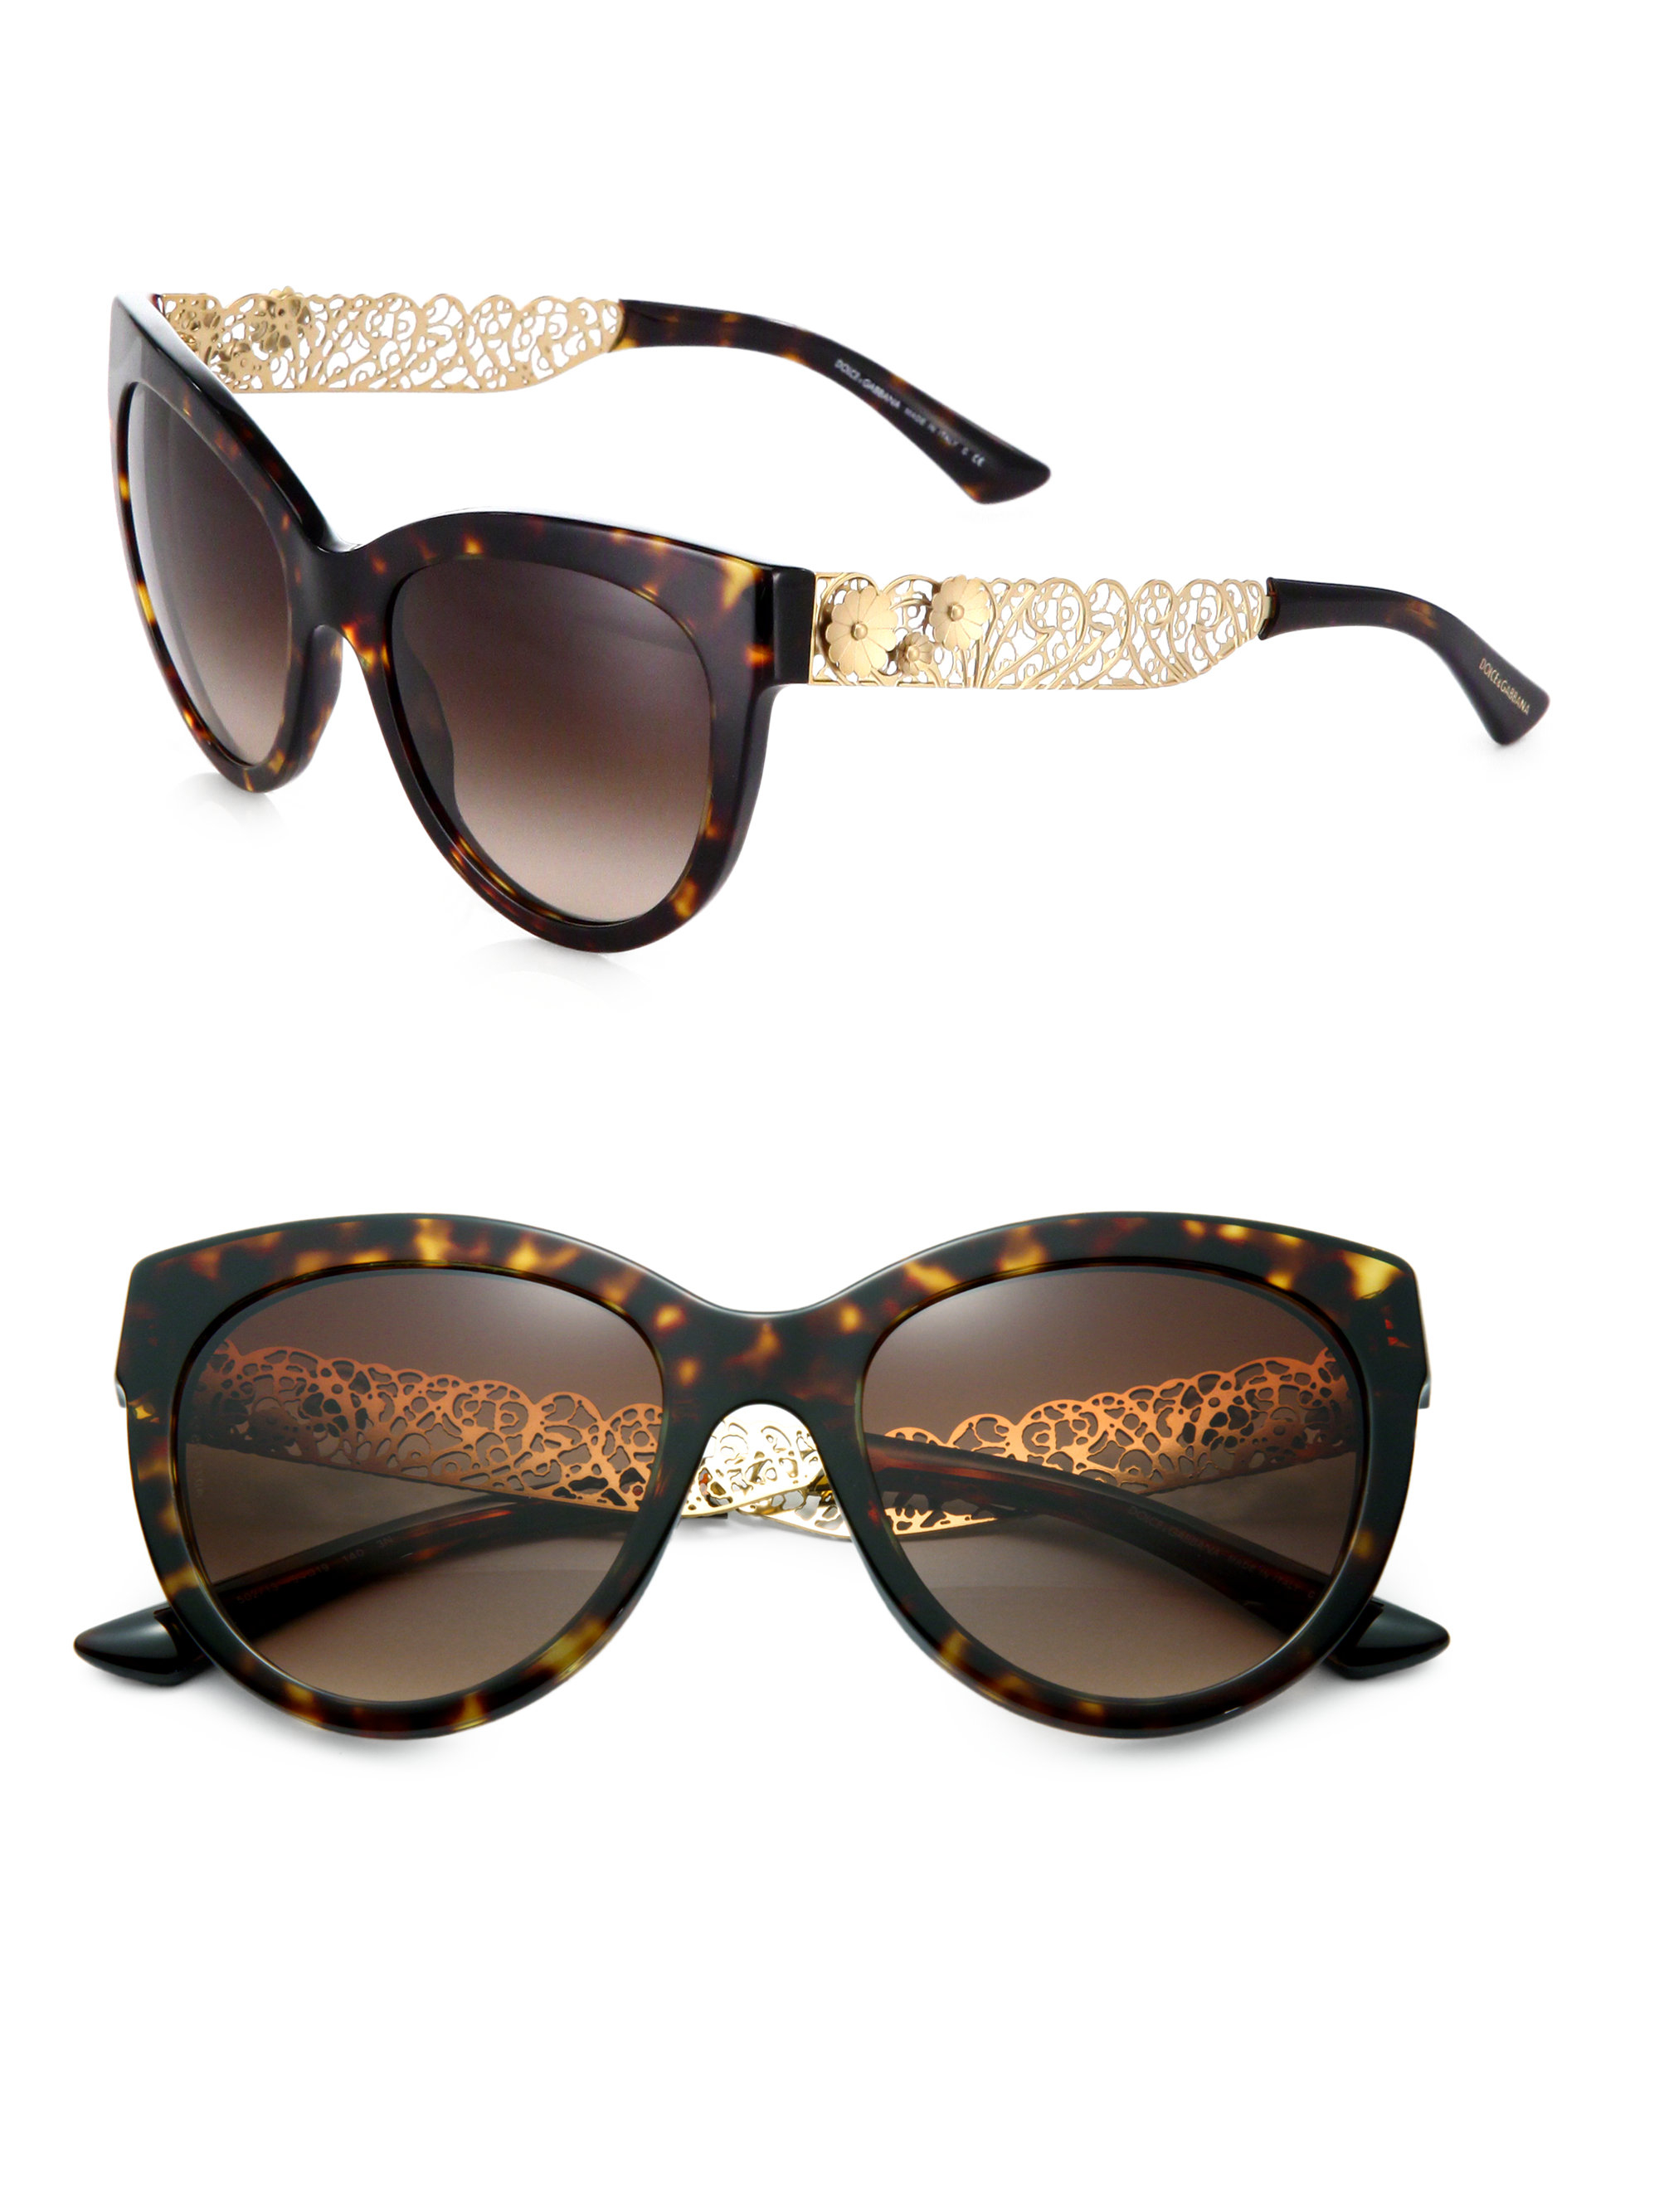 Lyst - Dolce & Gabbana Filigree Cat'S-Eye Sunglasses in Brown